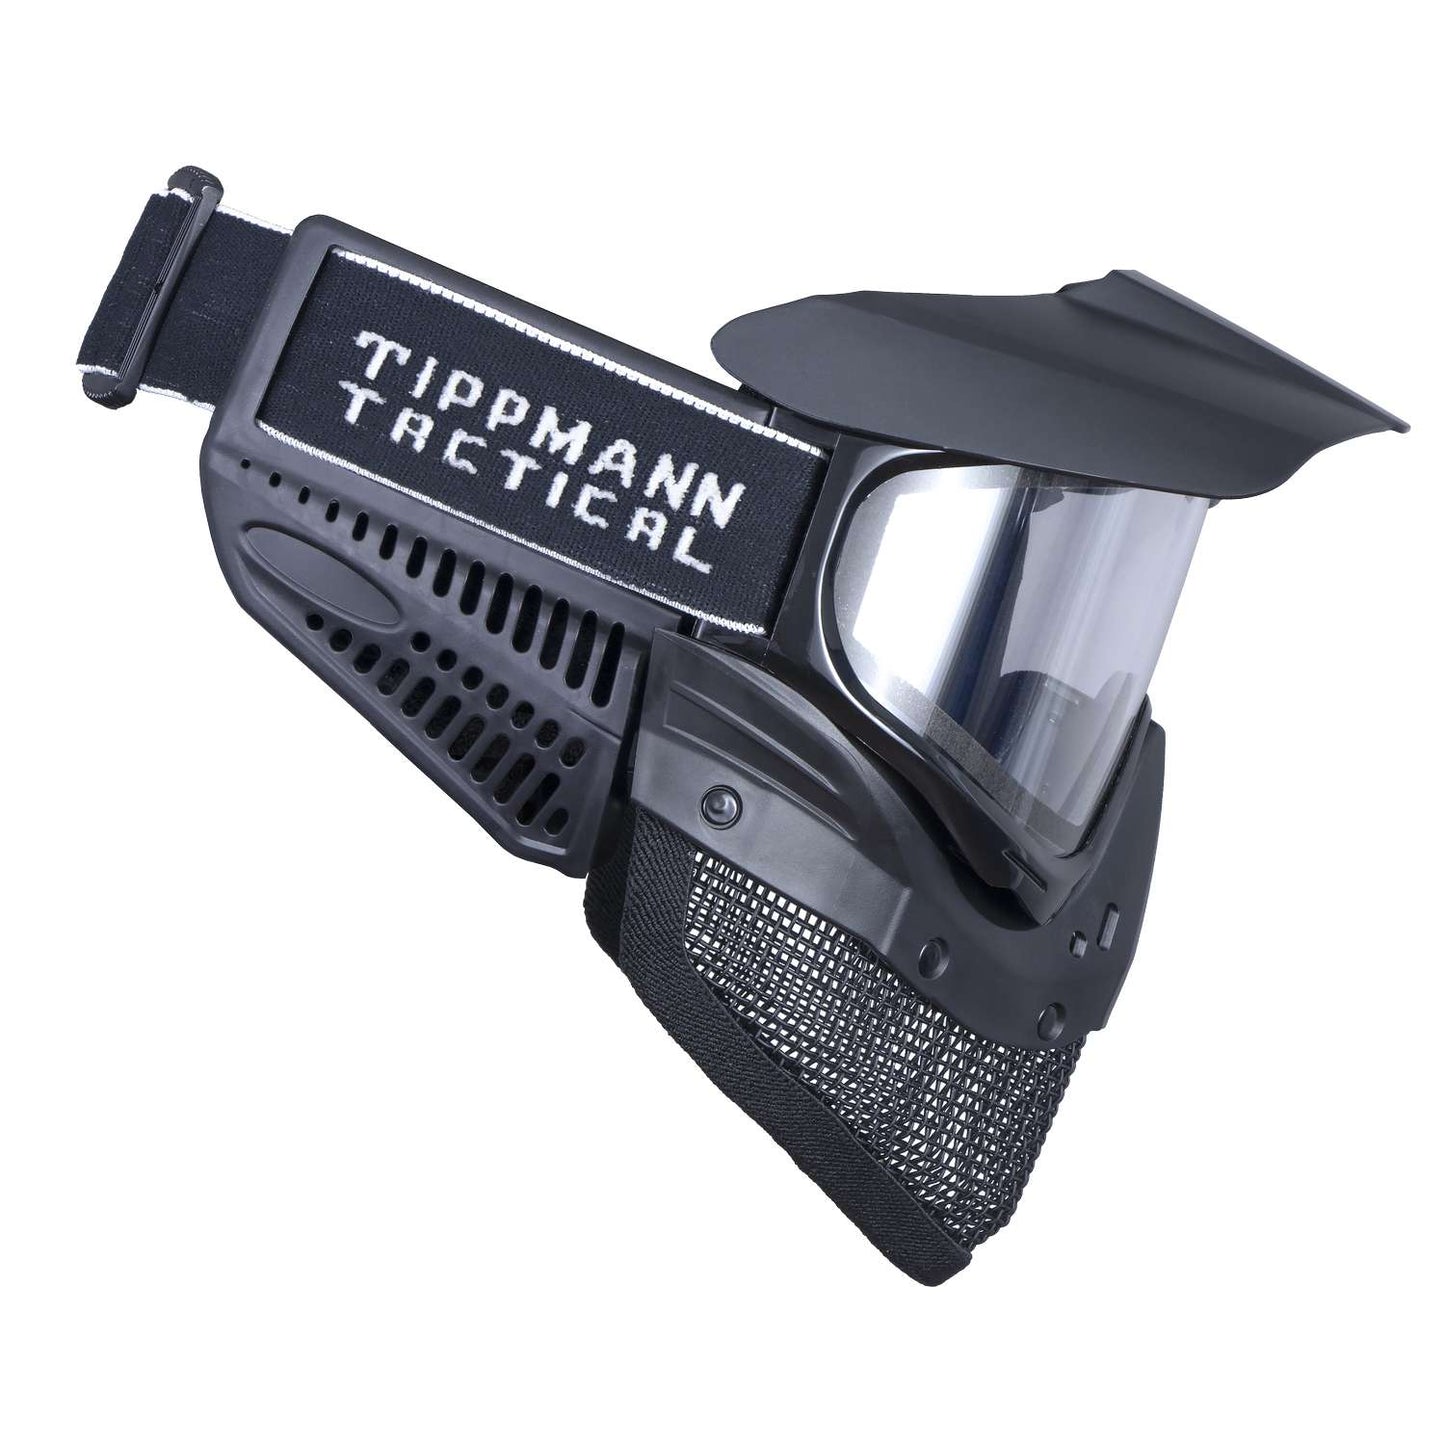 Tippmann Tactical Mesh Airsoft Goggle